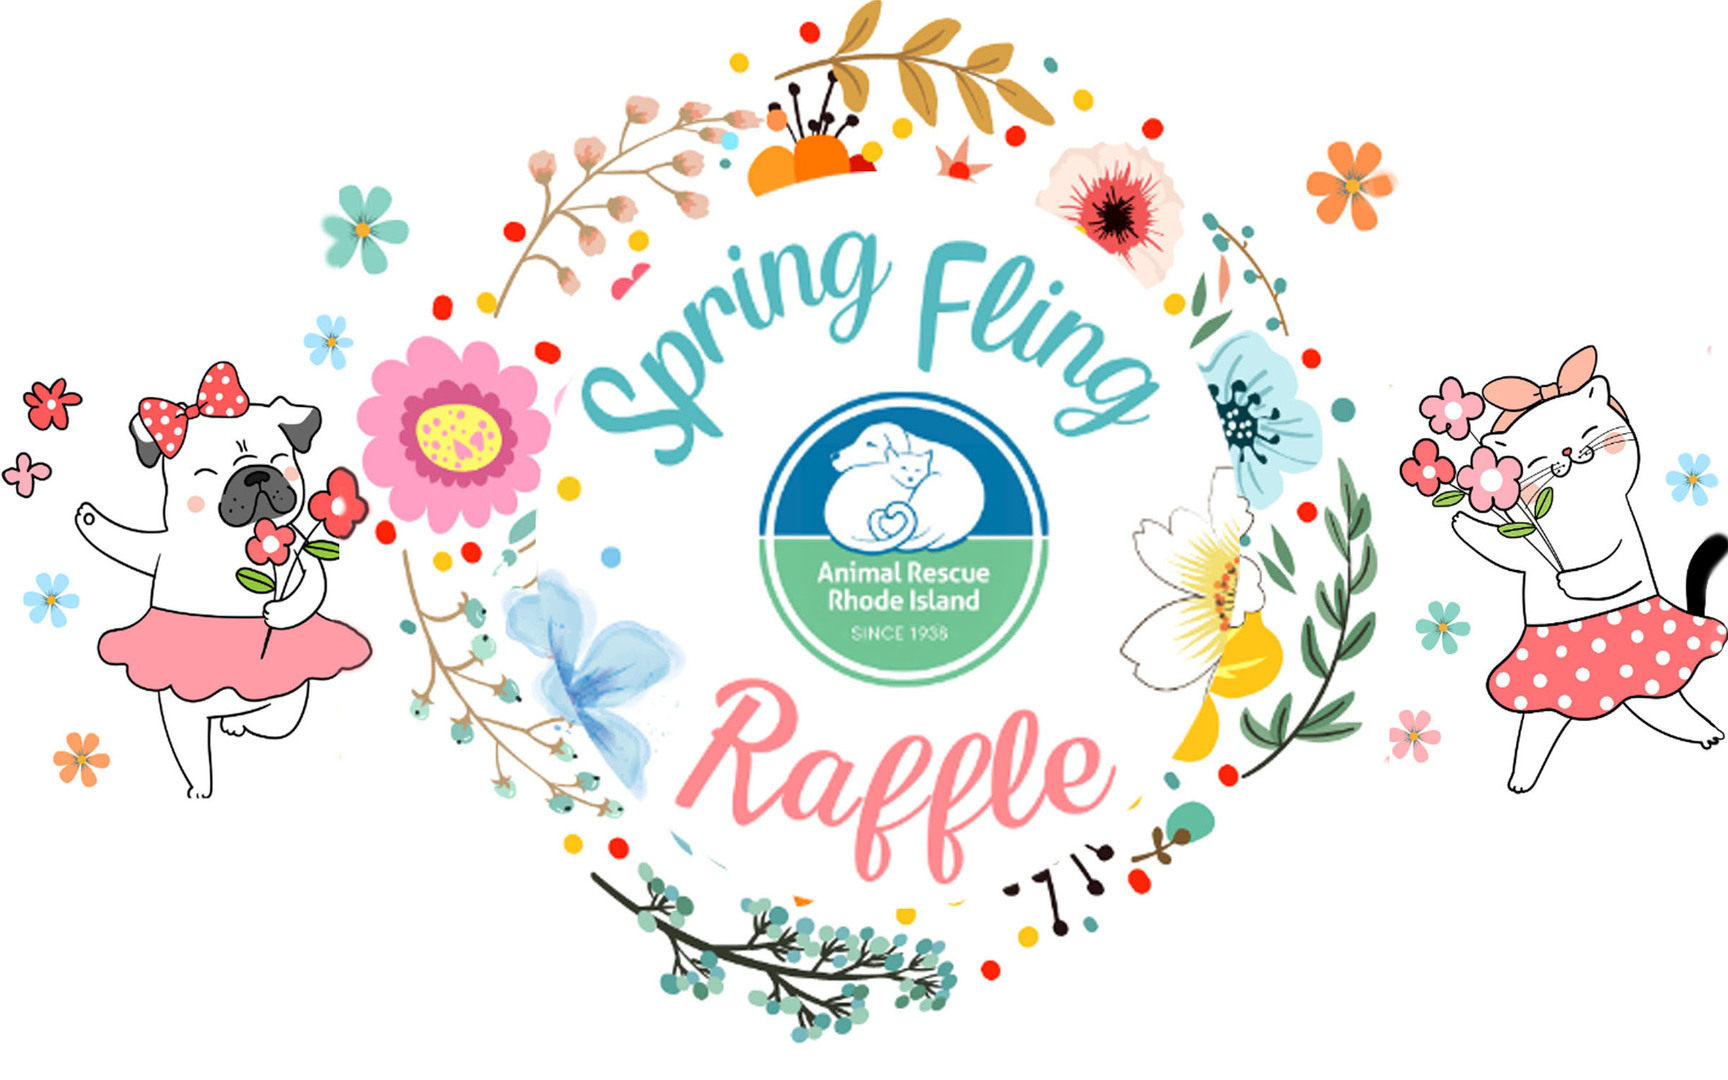 Spring Fling Raffle at Animal Rescue Rhode Island, South Kingstown, Rhode Island, United States